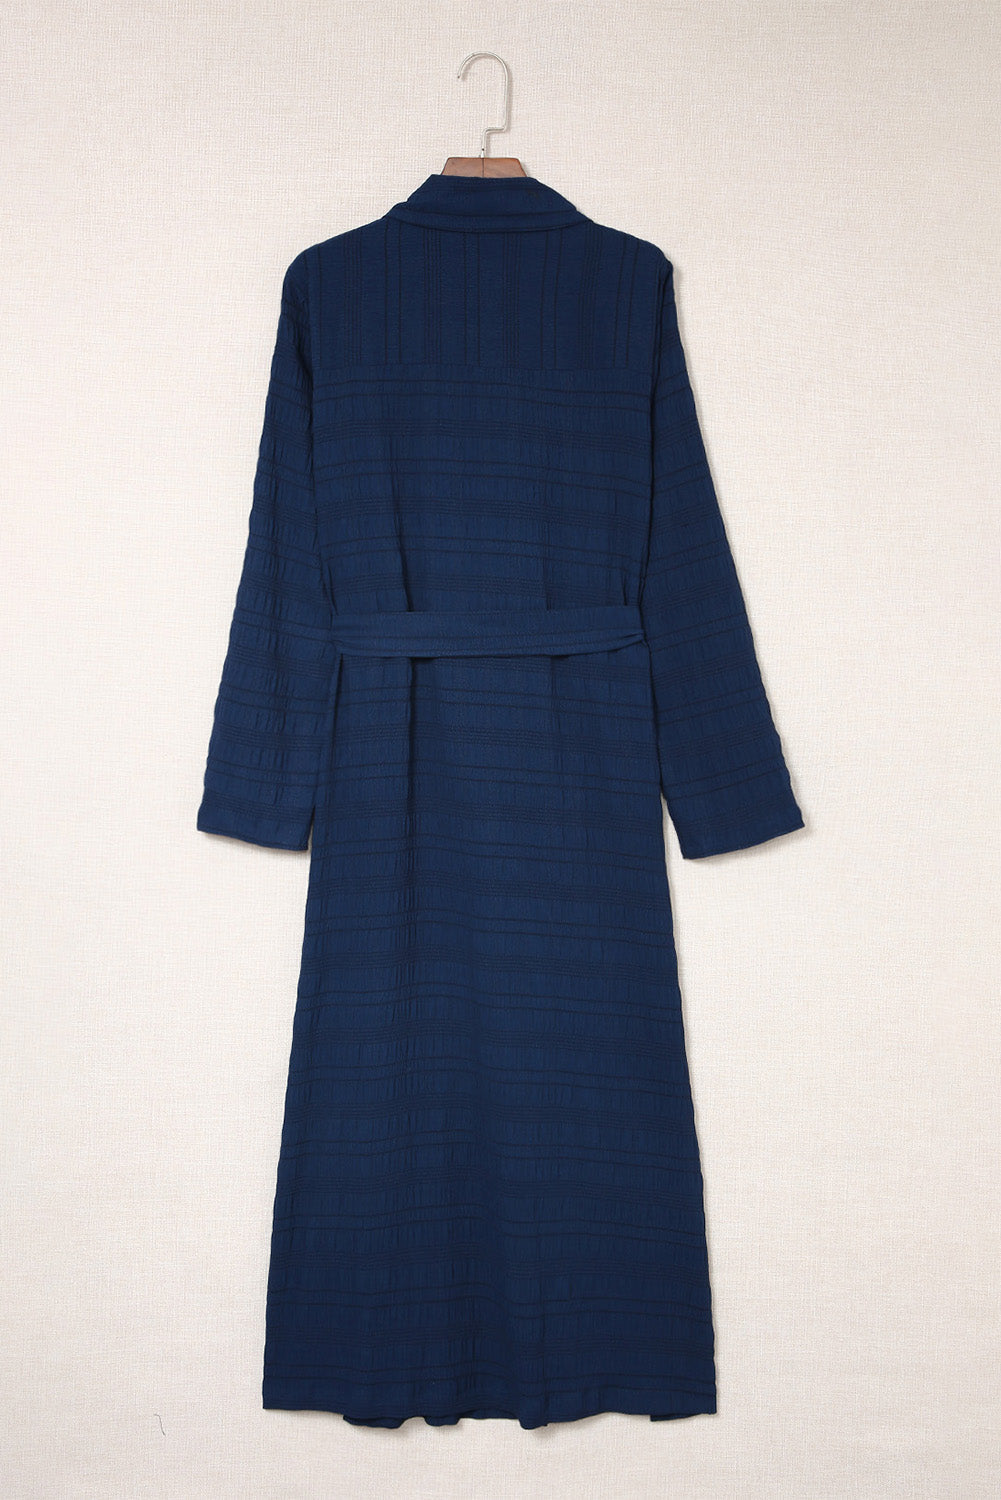 Blue Crinkle Textured Long Sleeve Shirt Dress with Belt